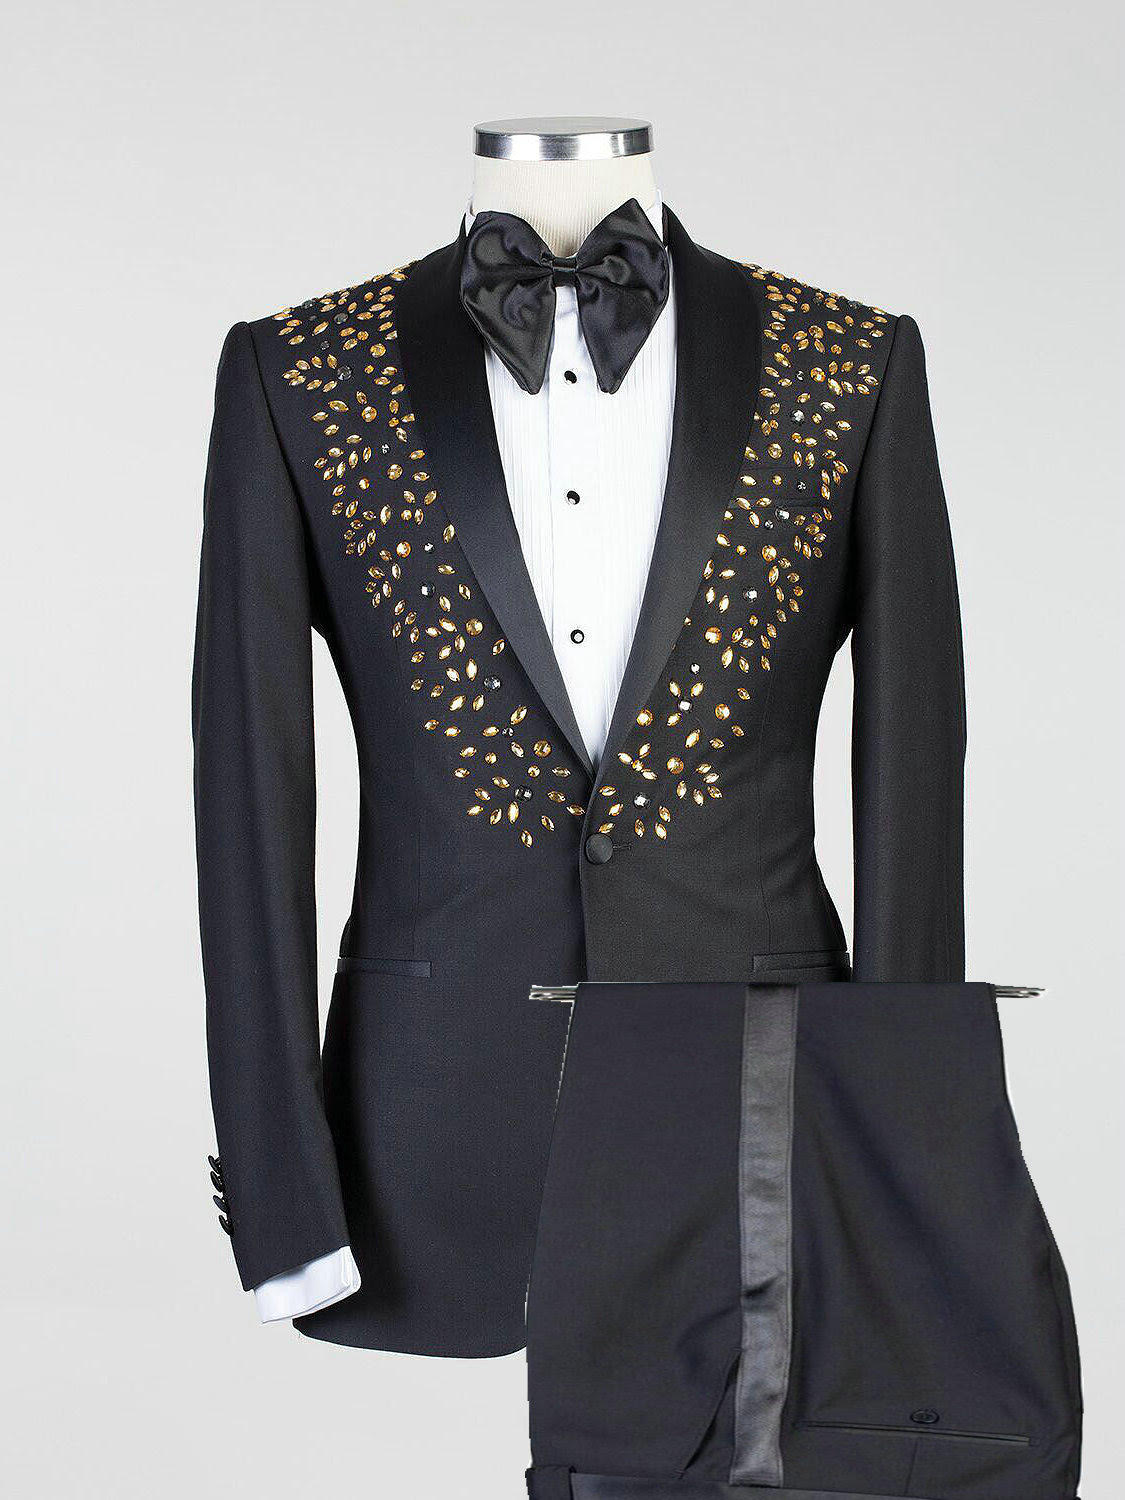 Tuxedo # 377 - The Gentlemens Closet